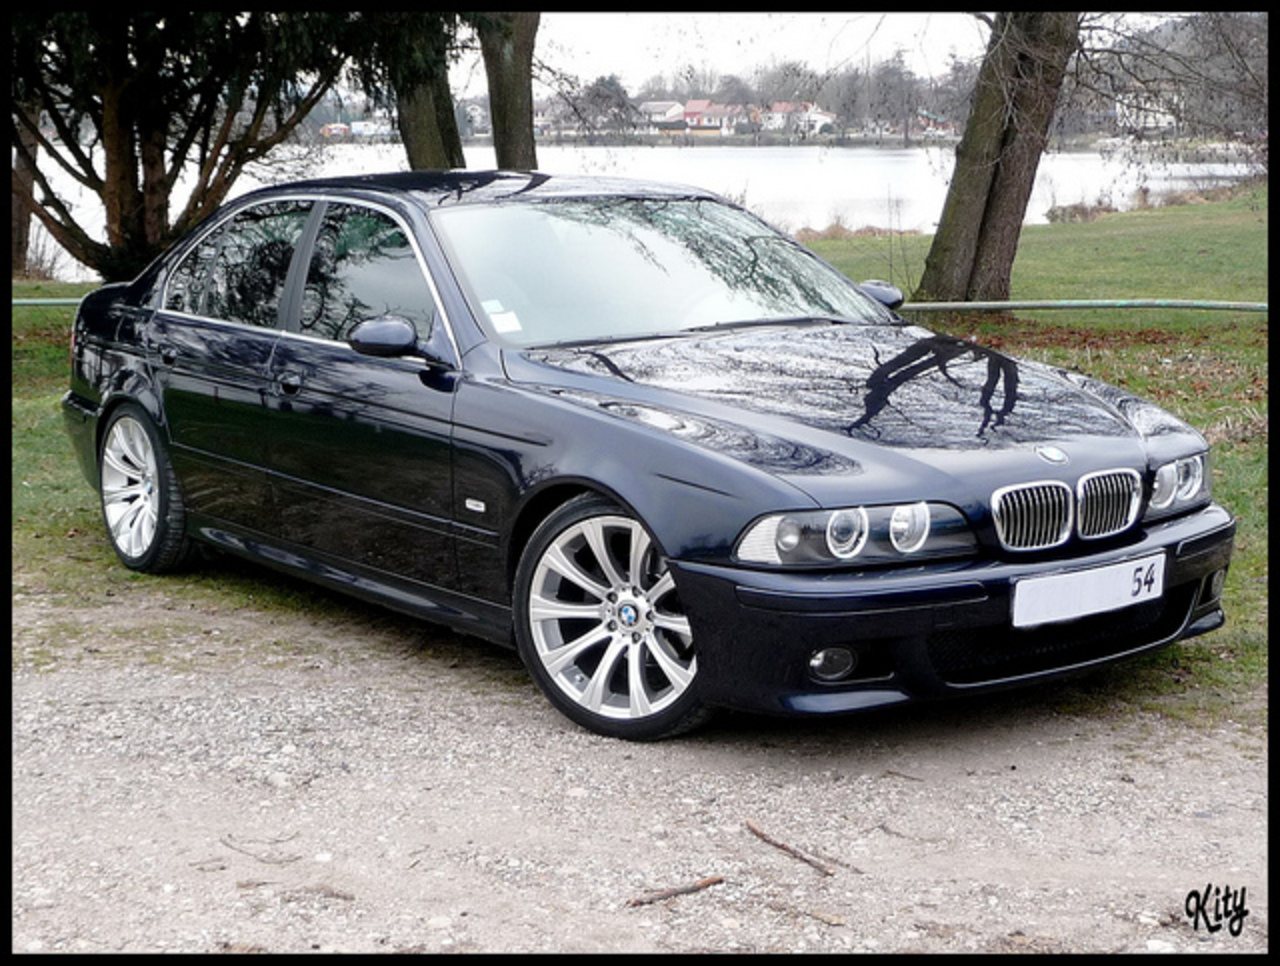 BMW 530 E39 | Flickr - Photo Sharing!